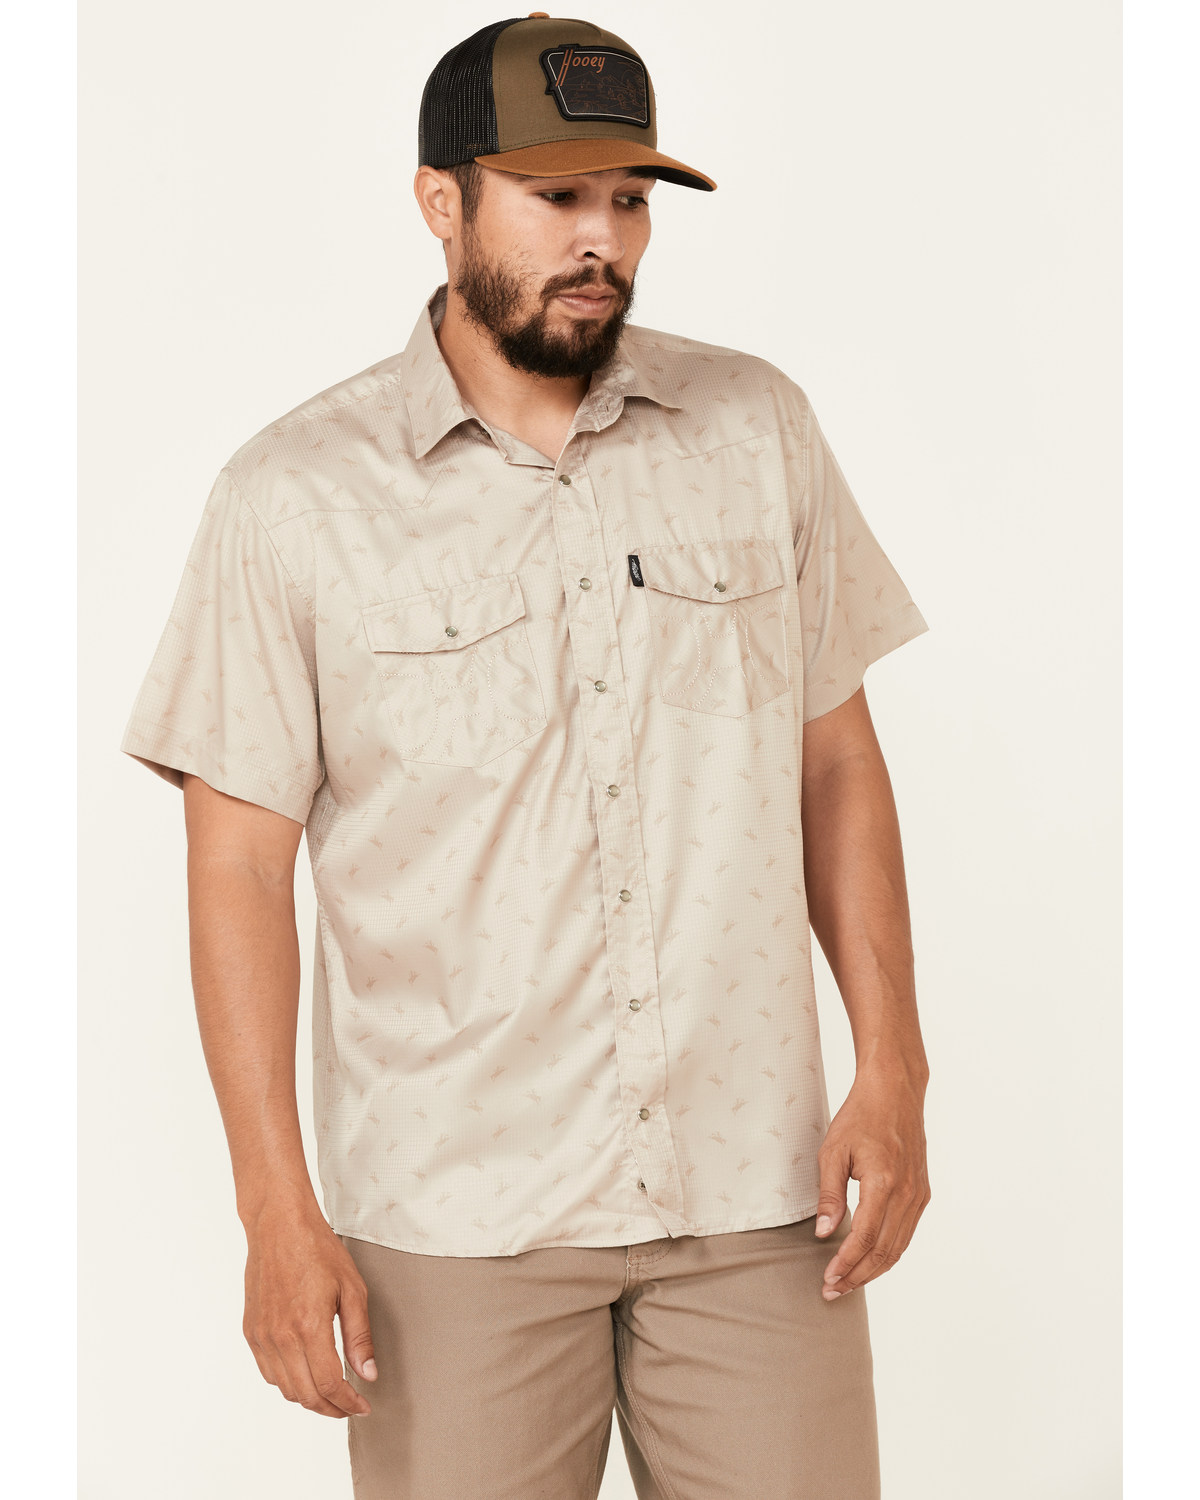 Hooey Men's Punchy Print Habitat Sol Short Sleeve Pearl Snap Western Shirt